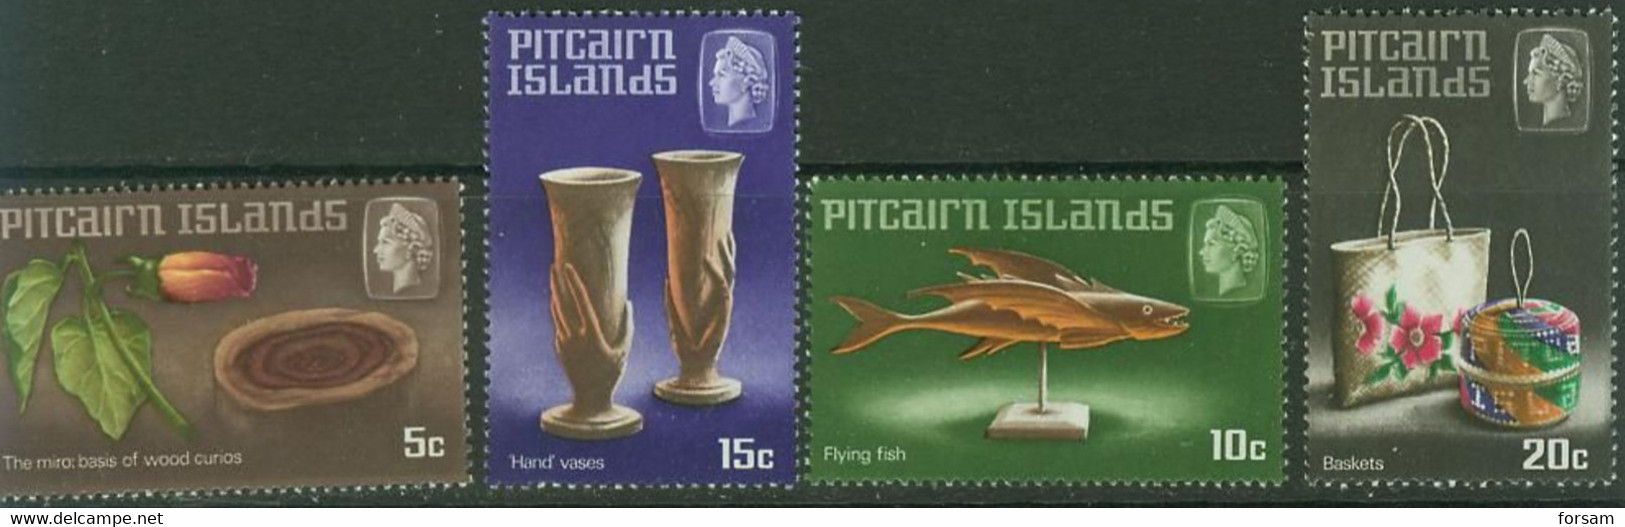 PITCAIRN ISLANDS..1968..Michel # 91-94...MNH...MiCV - 5 Euro. - Pitcairn